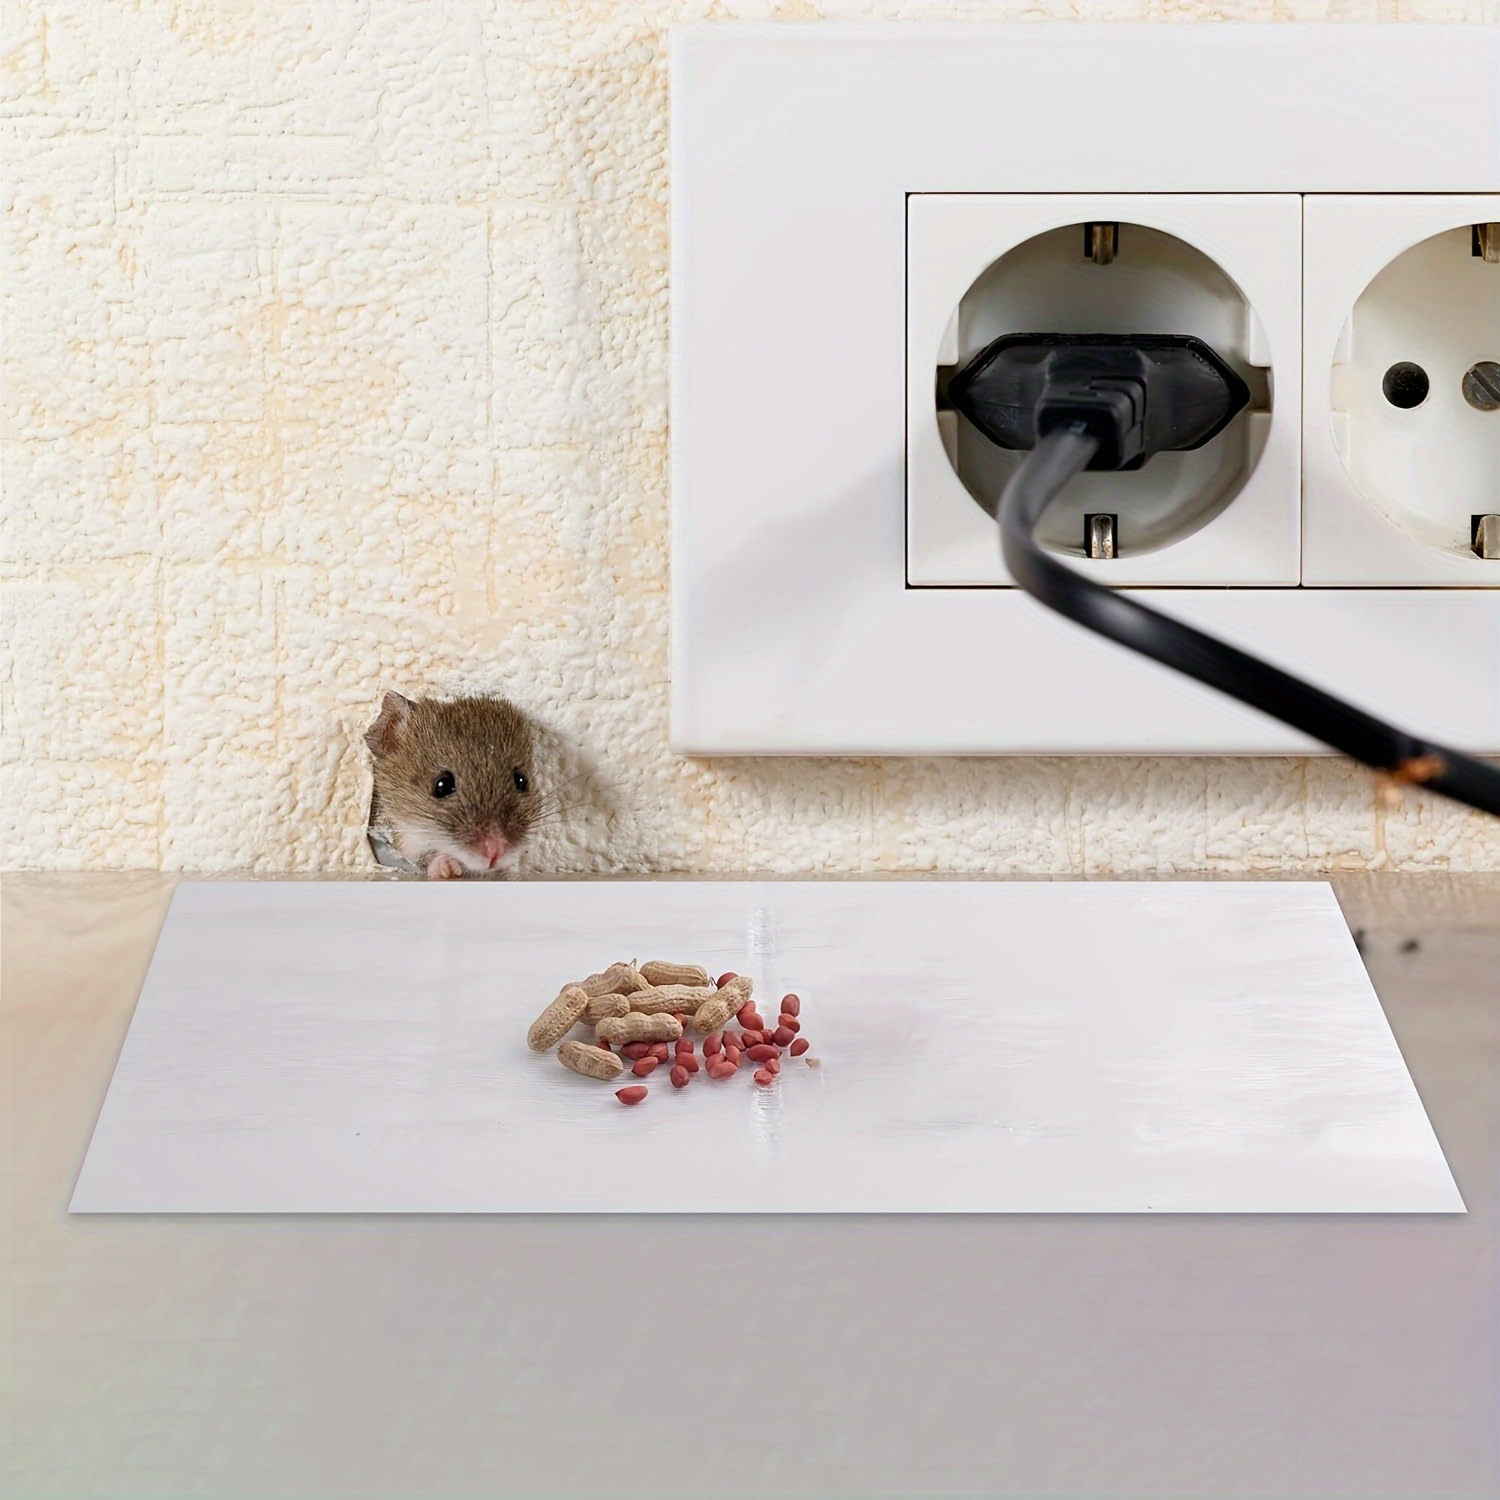 Trampa de pegamento para ratones ratas cucarachas unidades